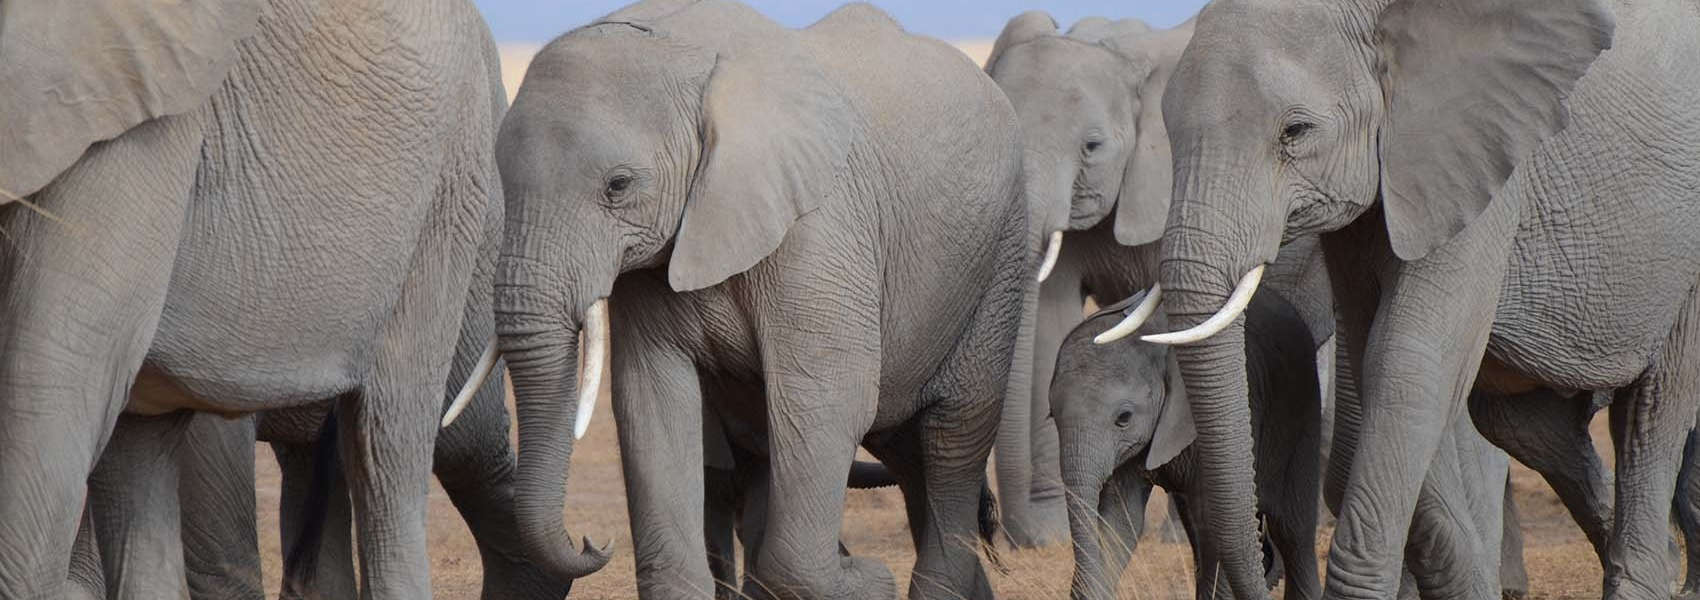 Elephant Safaris in Africa